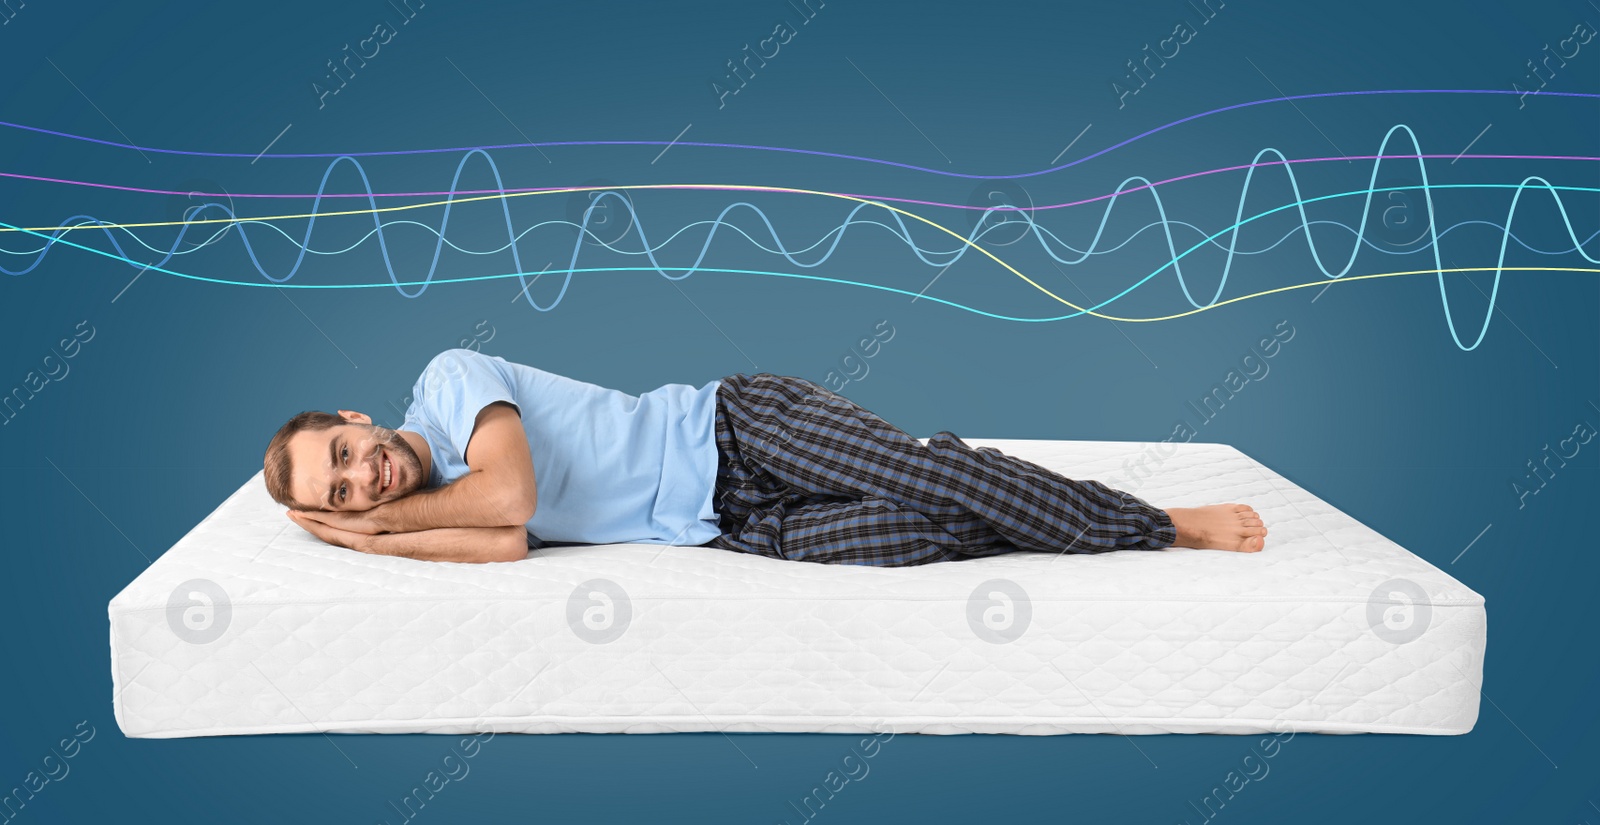 Image of Happy man lying on mattress against blue background. Healthy circadian rhythm and sleep habits